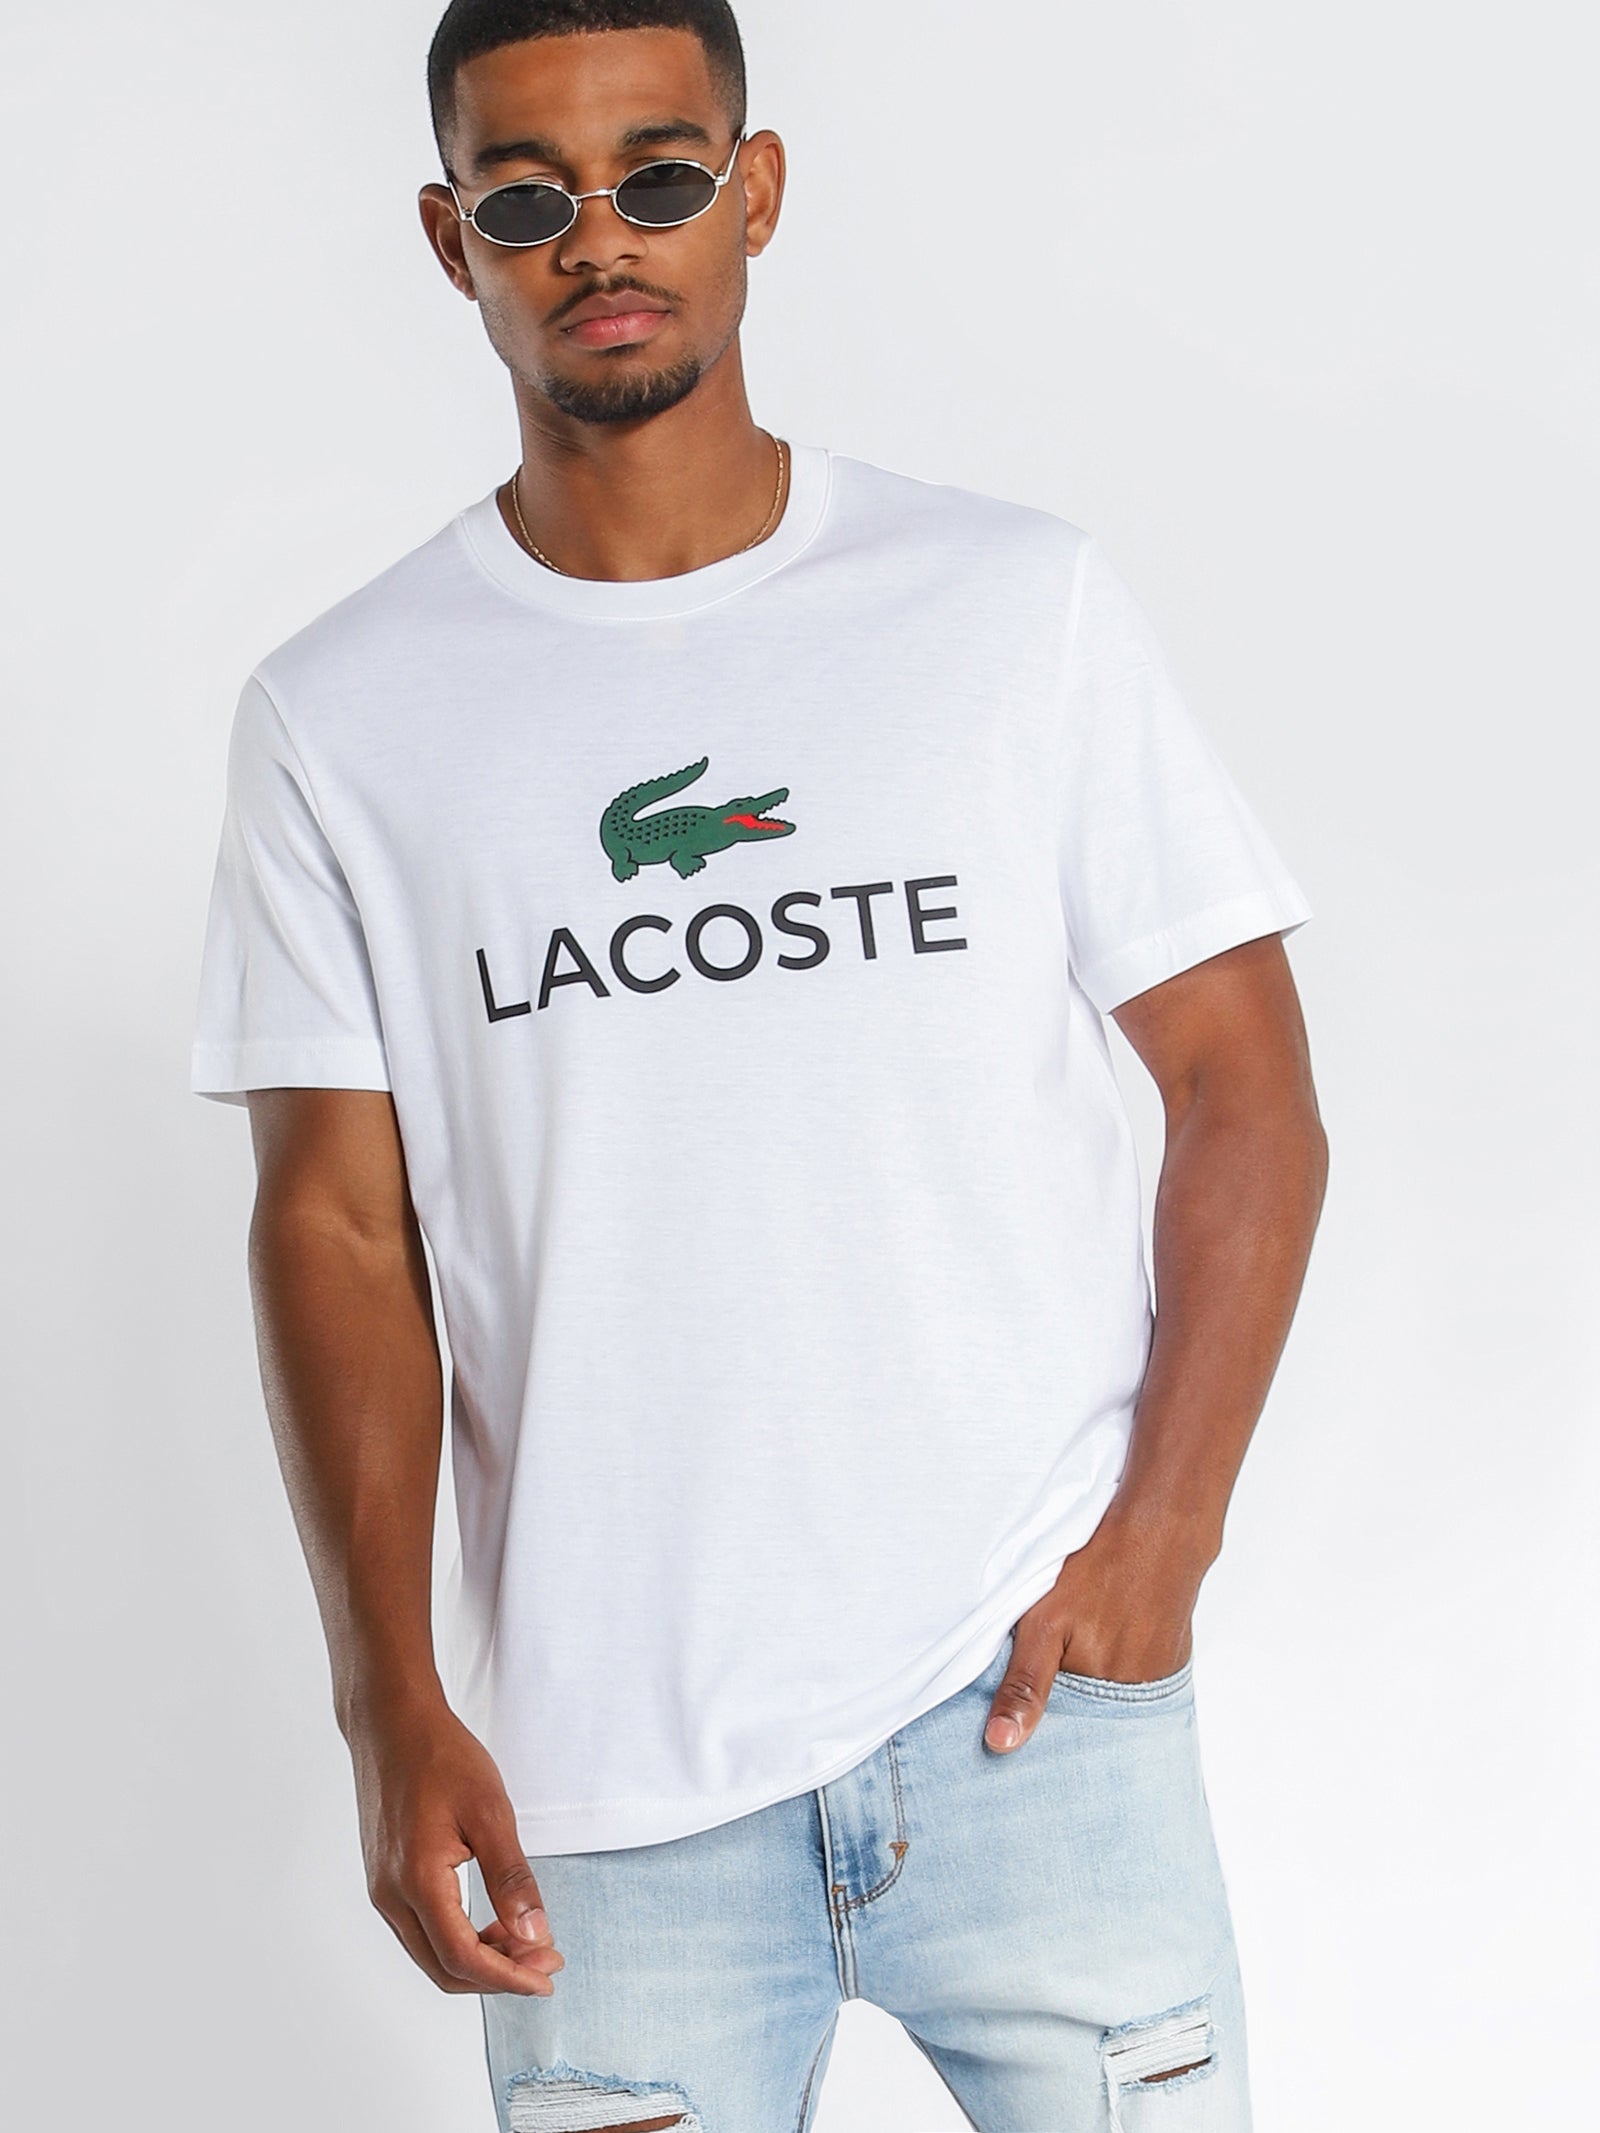 Lacoste Clothing & Footwear | Glue Store